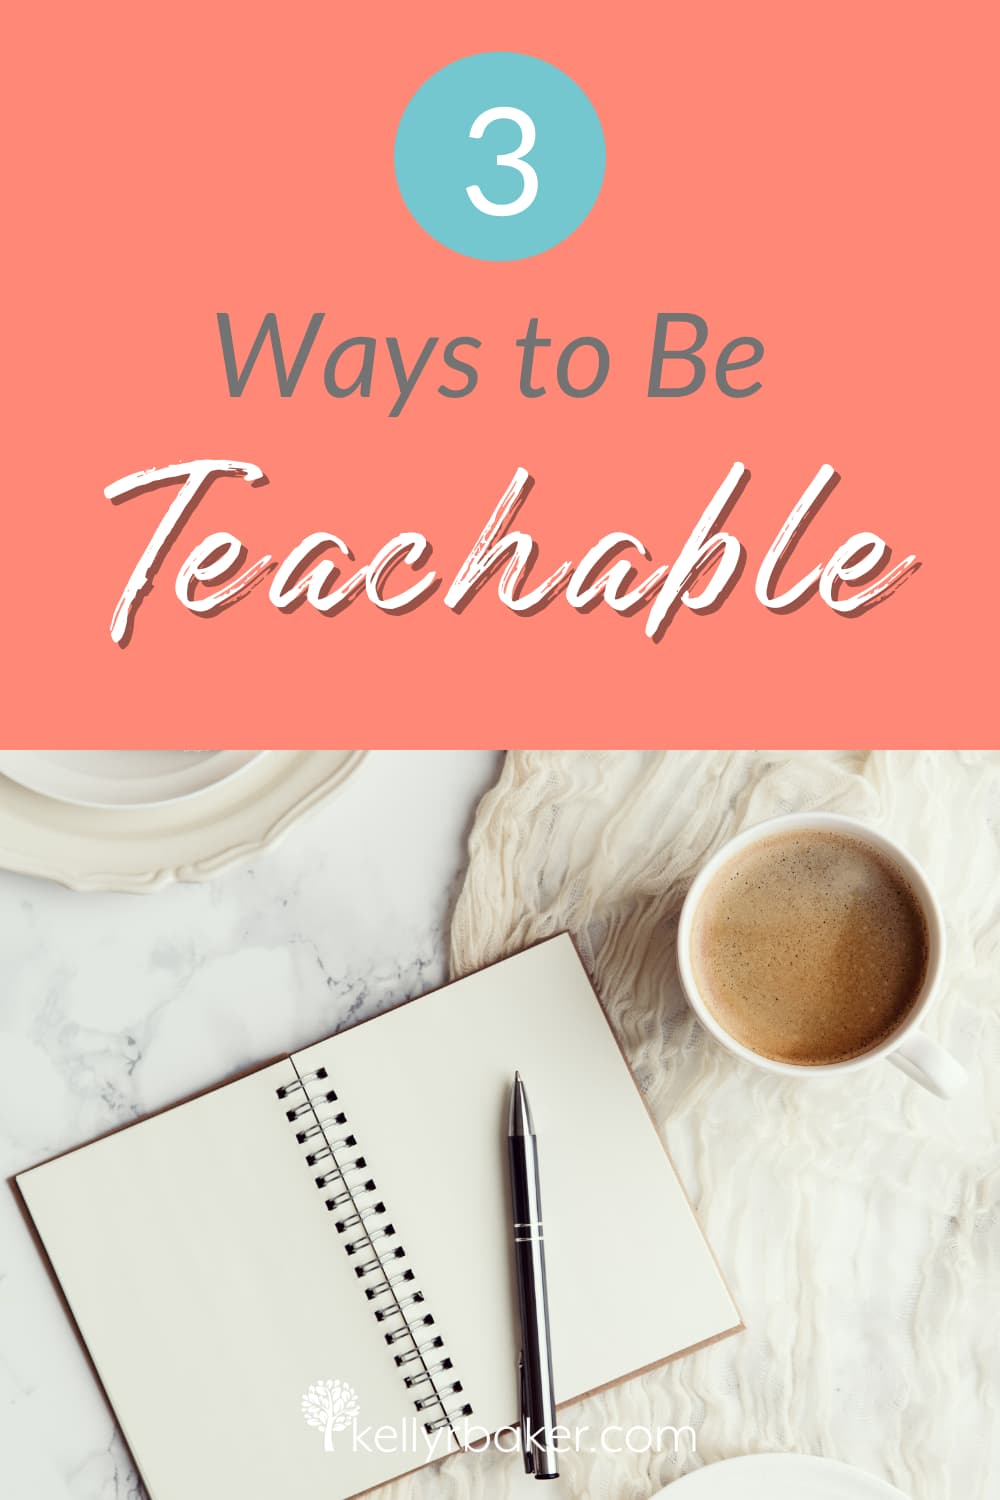 3 Ways to Be Teachable